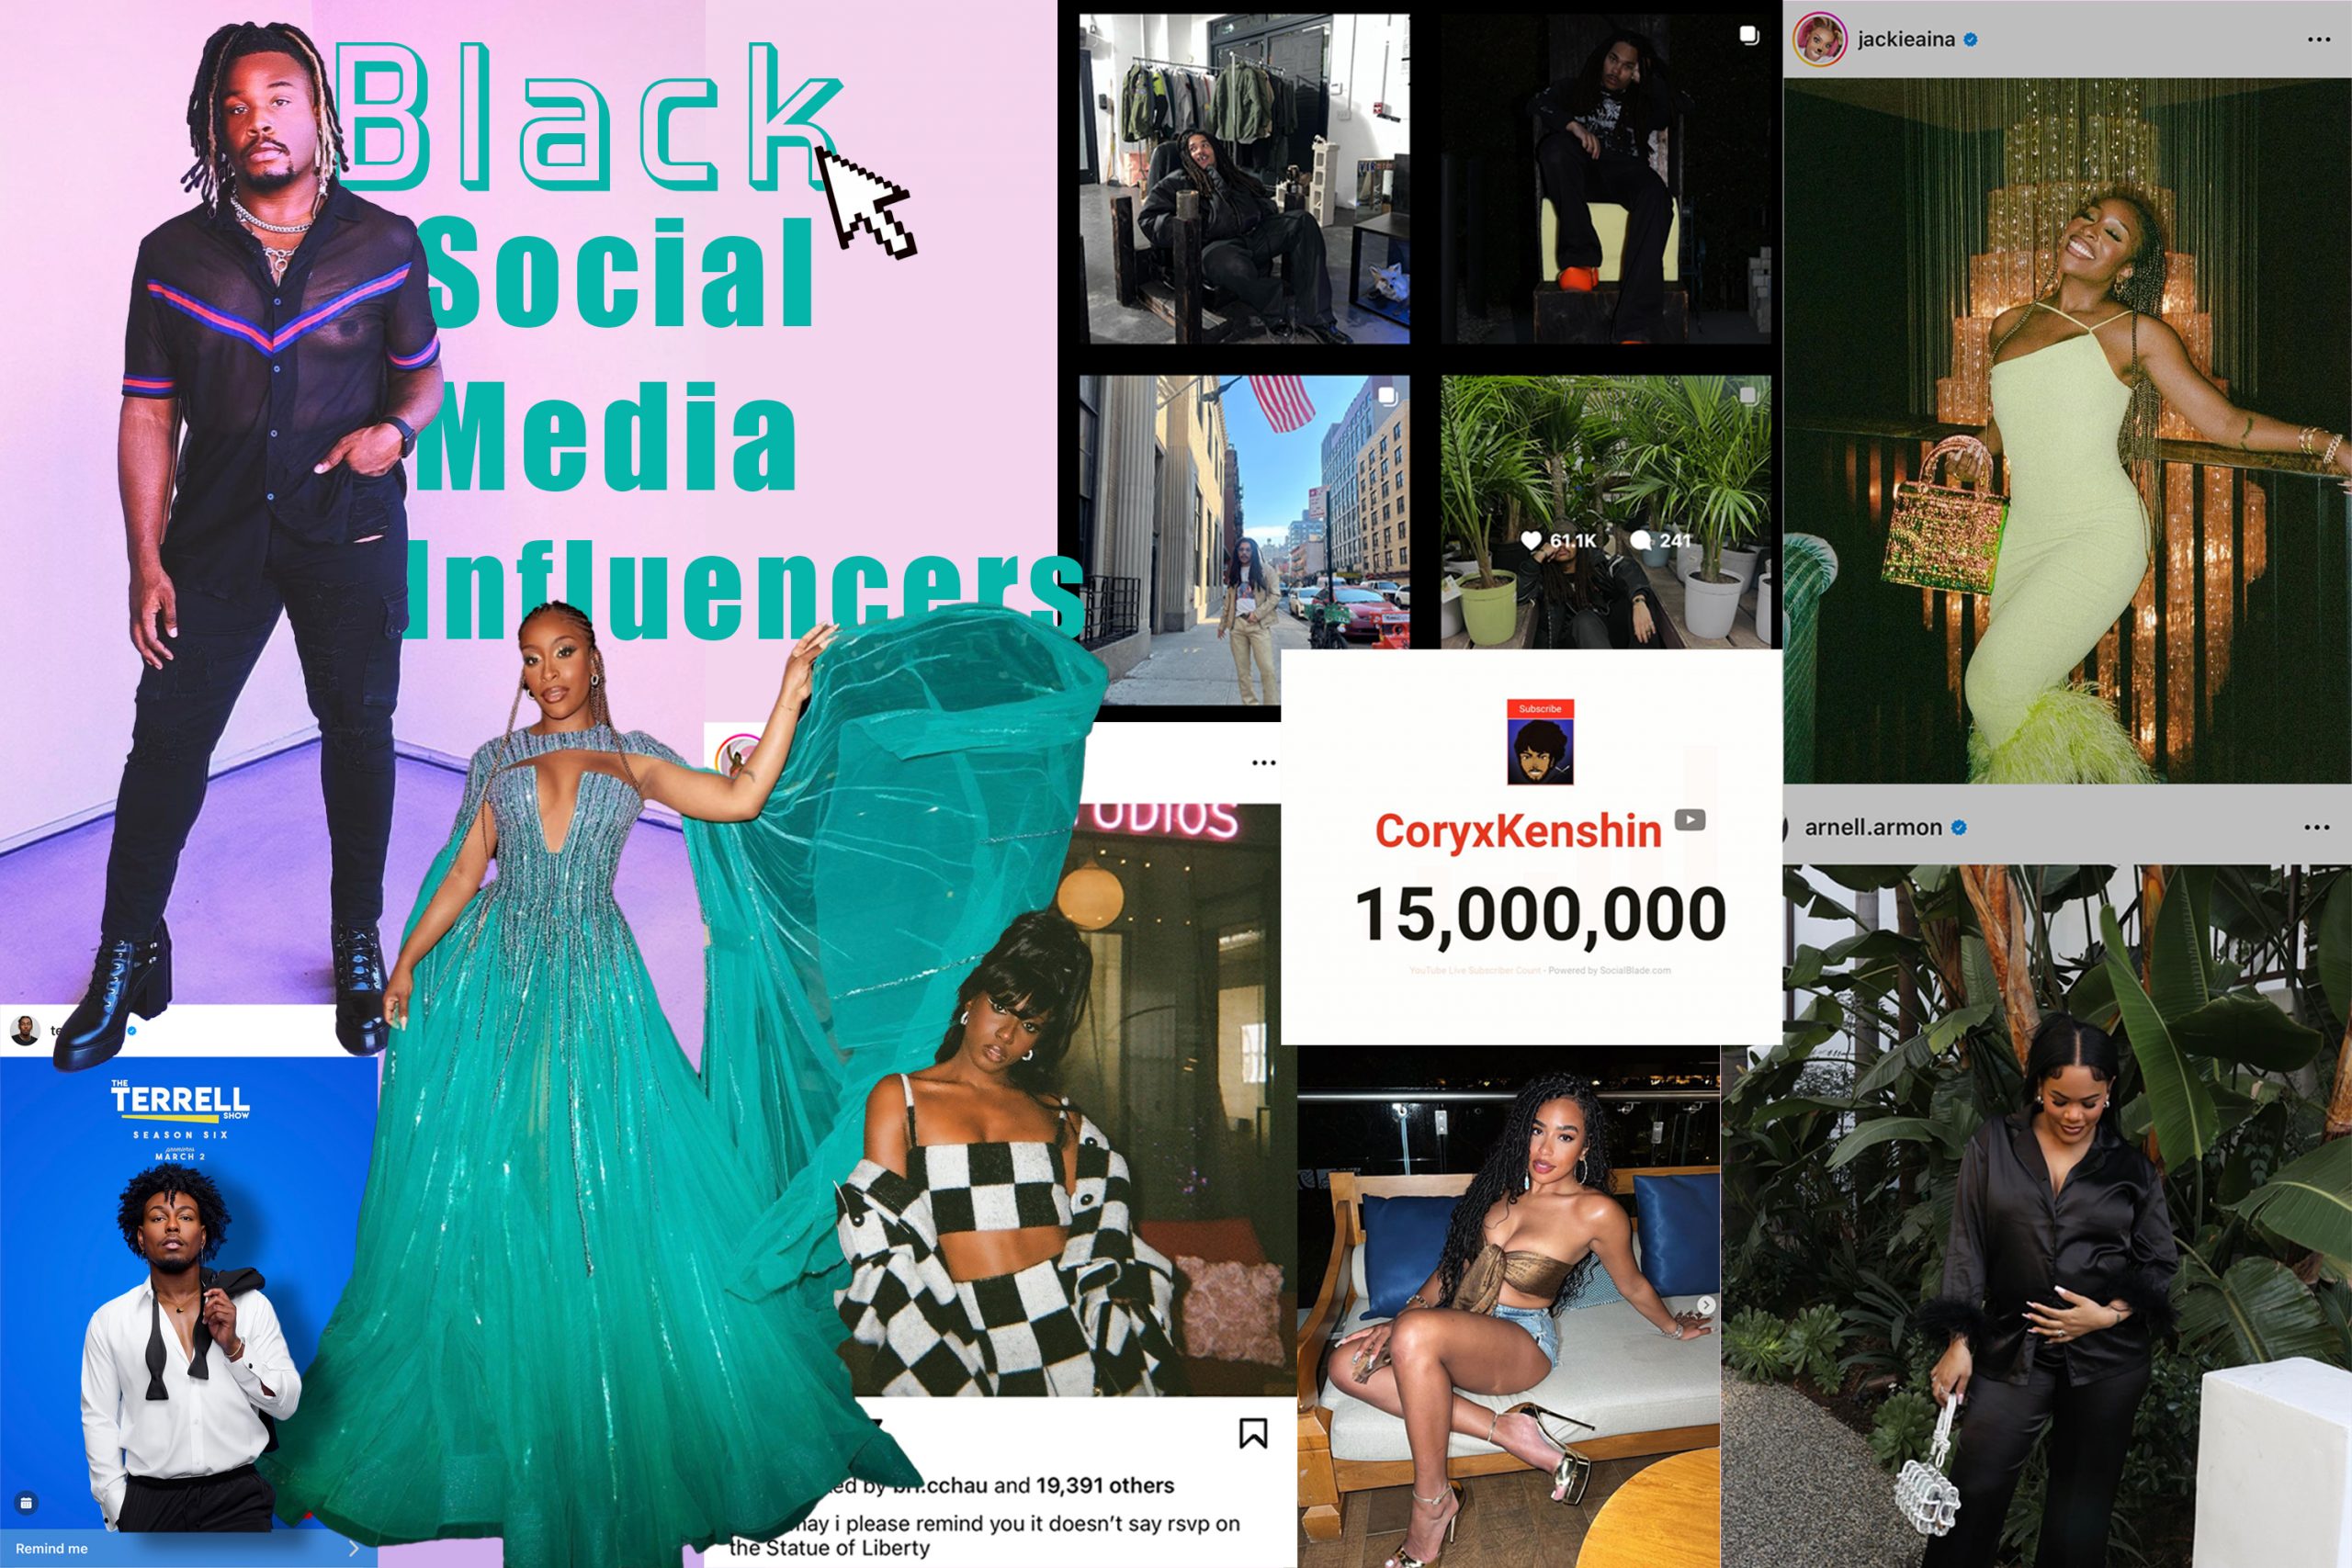 Collage of Black social media influencers